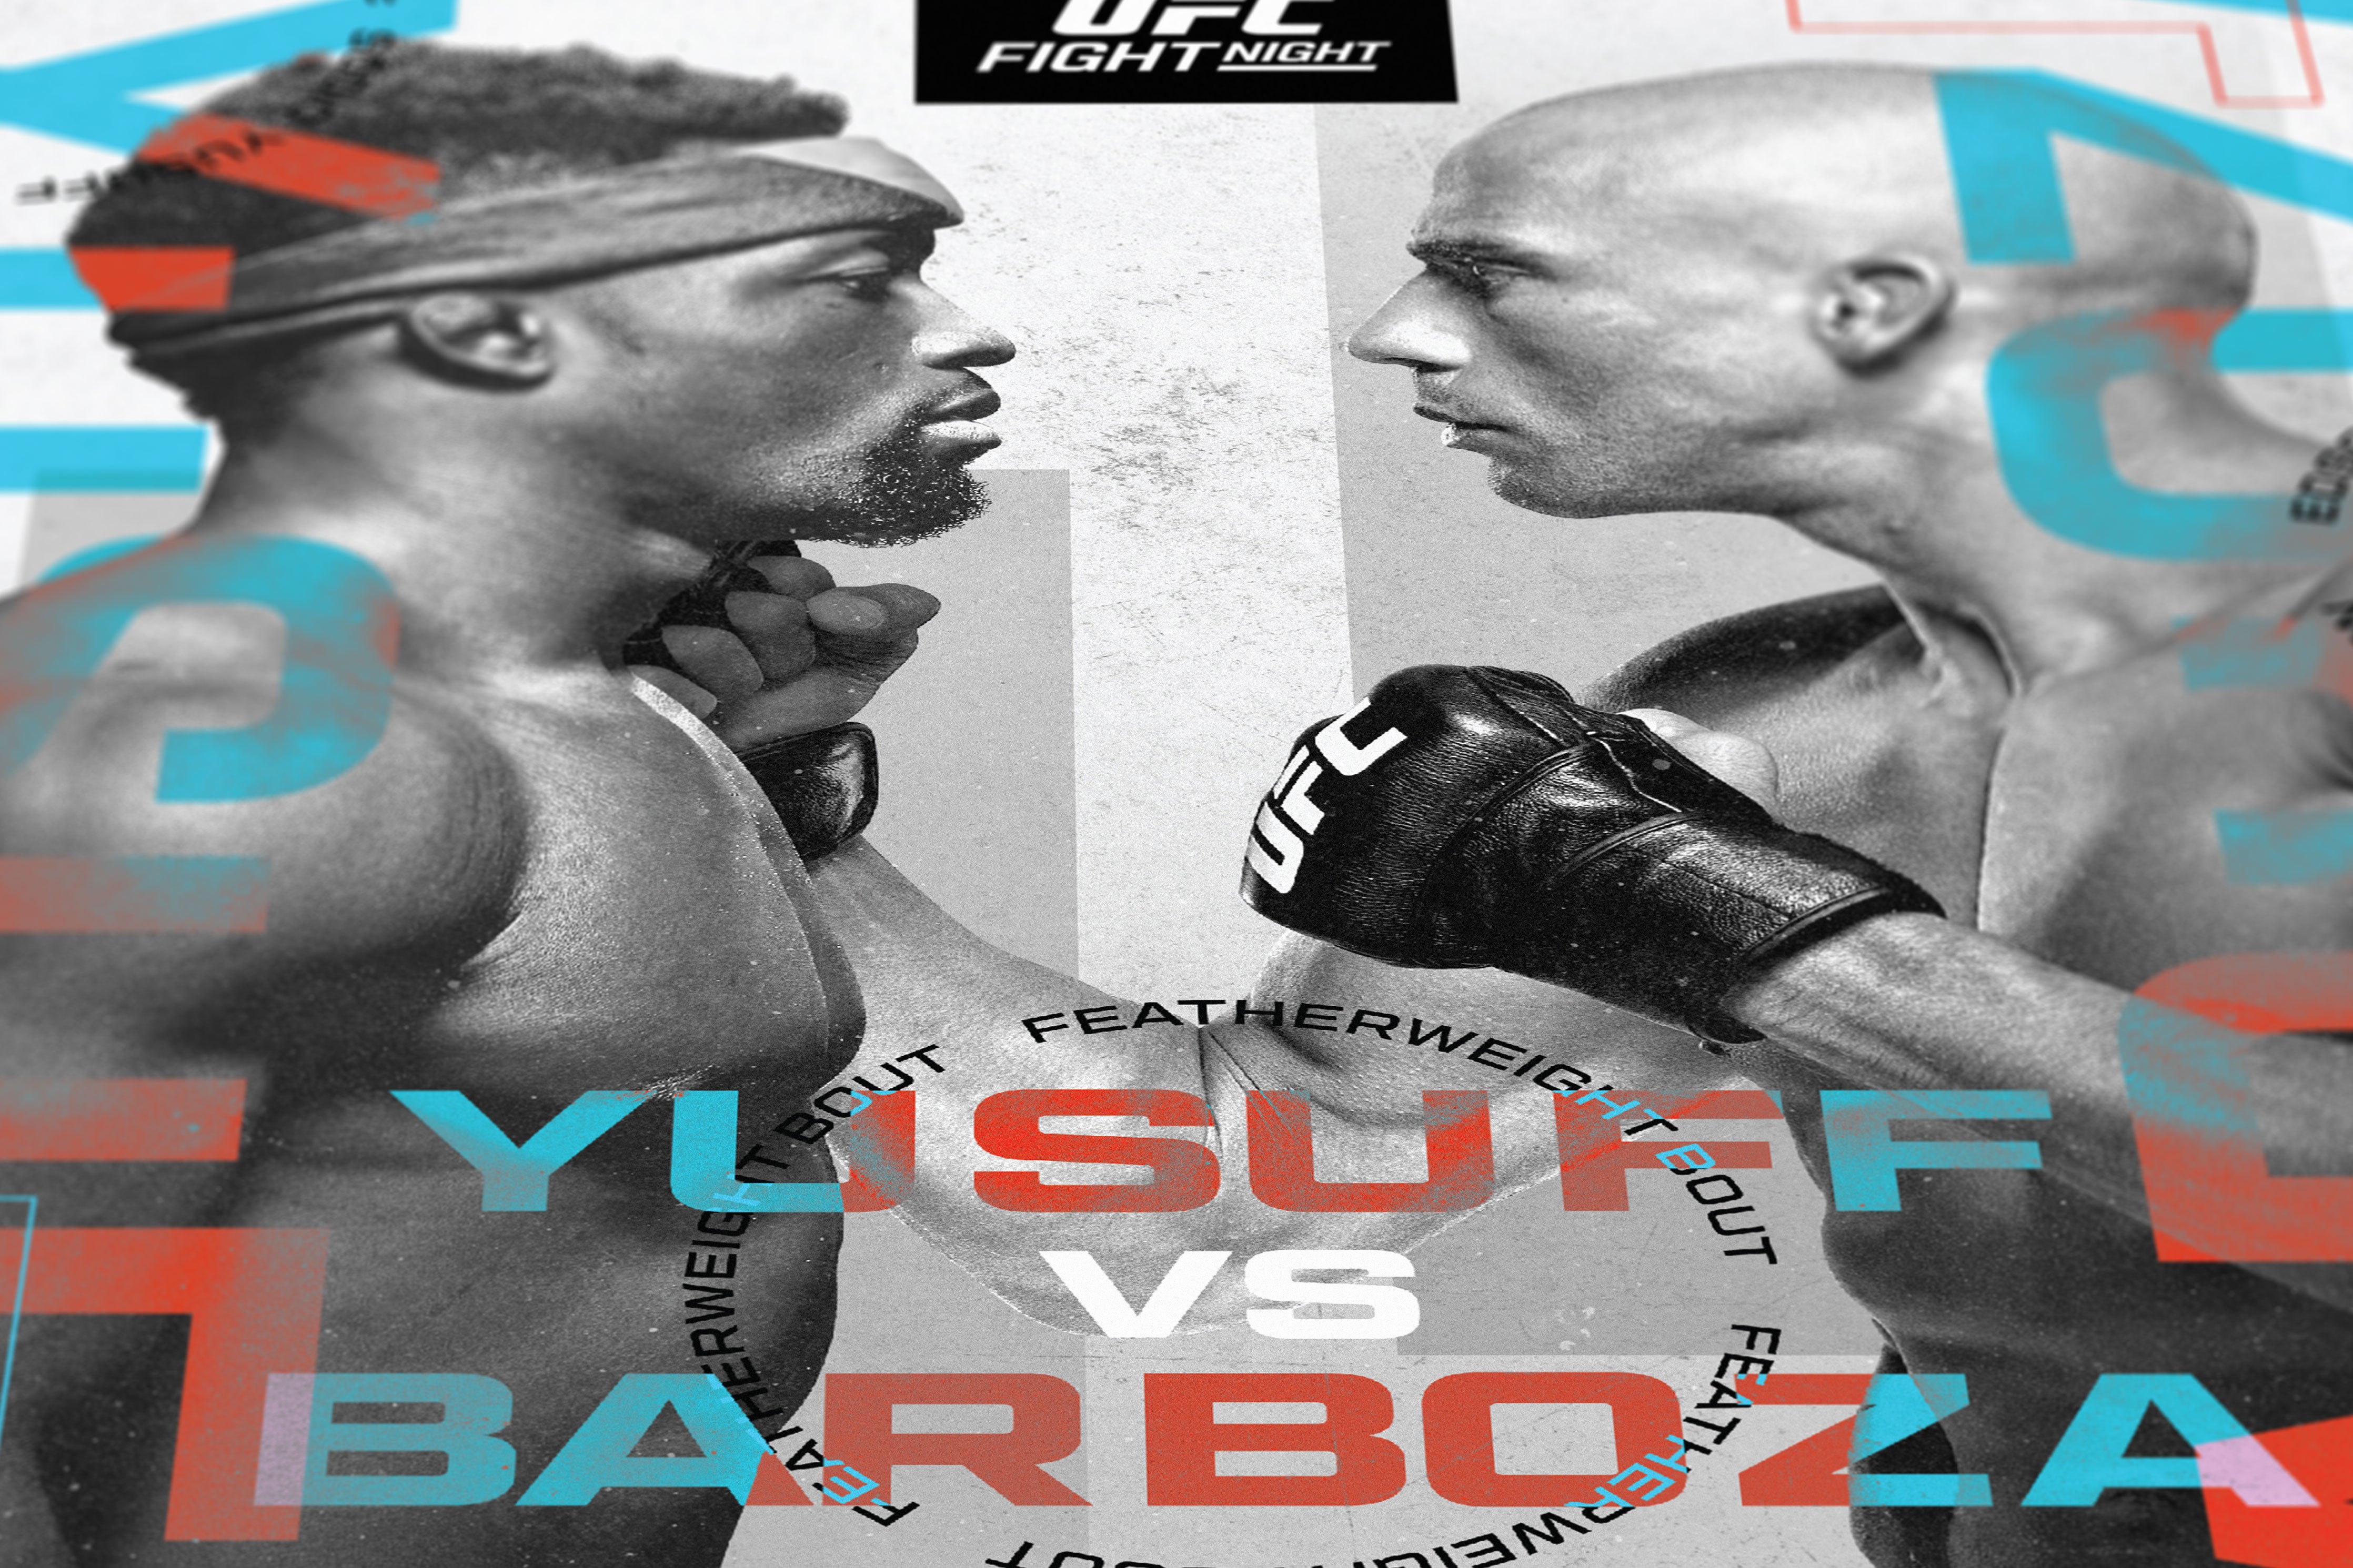 UFC Fight Night: Yusuff vs Barboza Autographed Event Poster